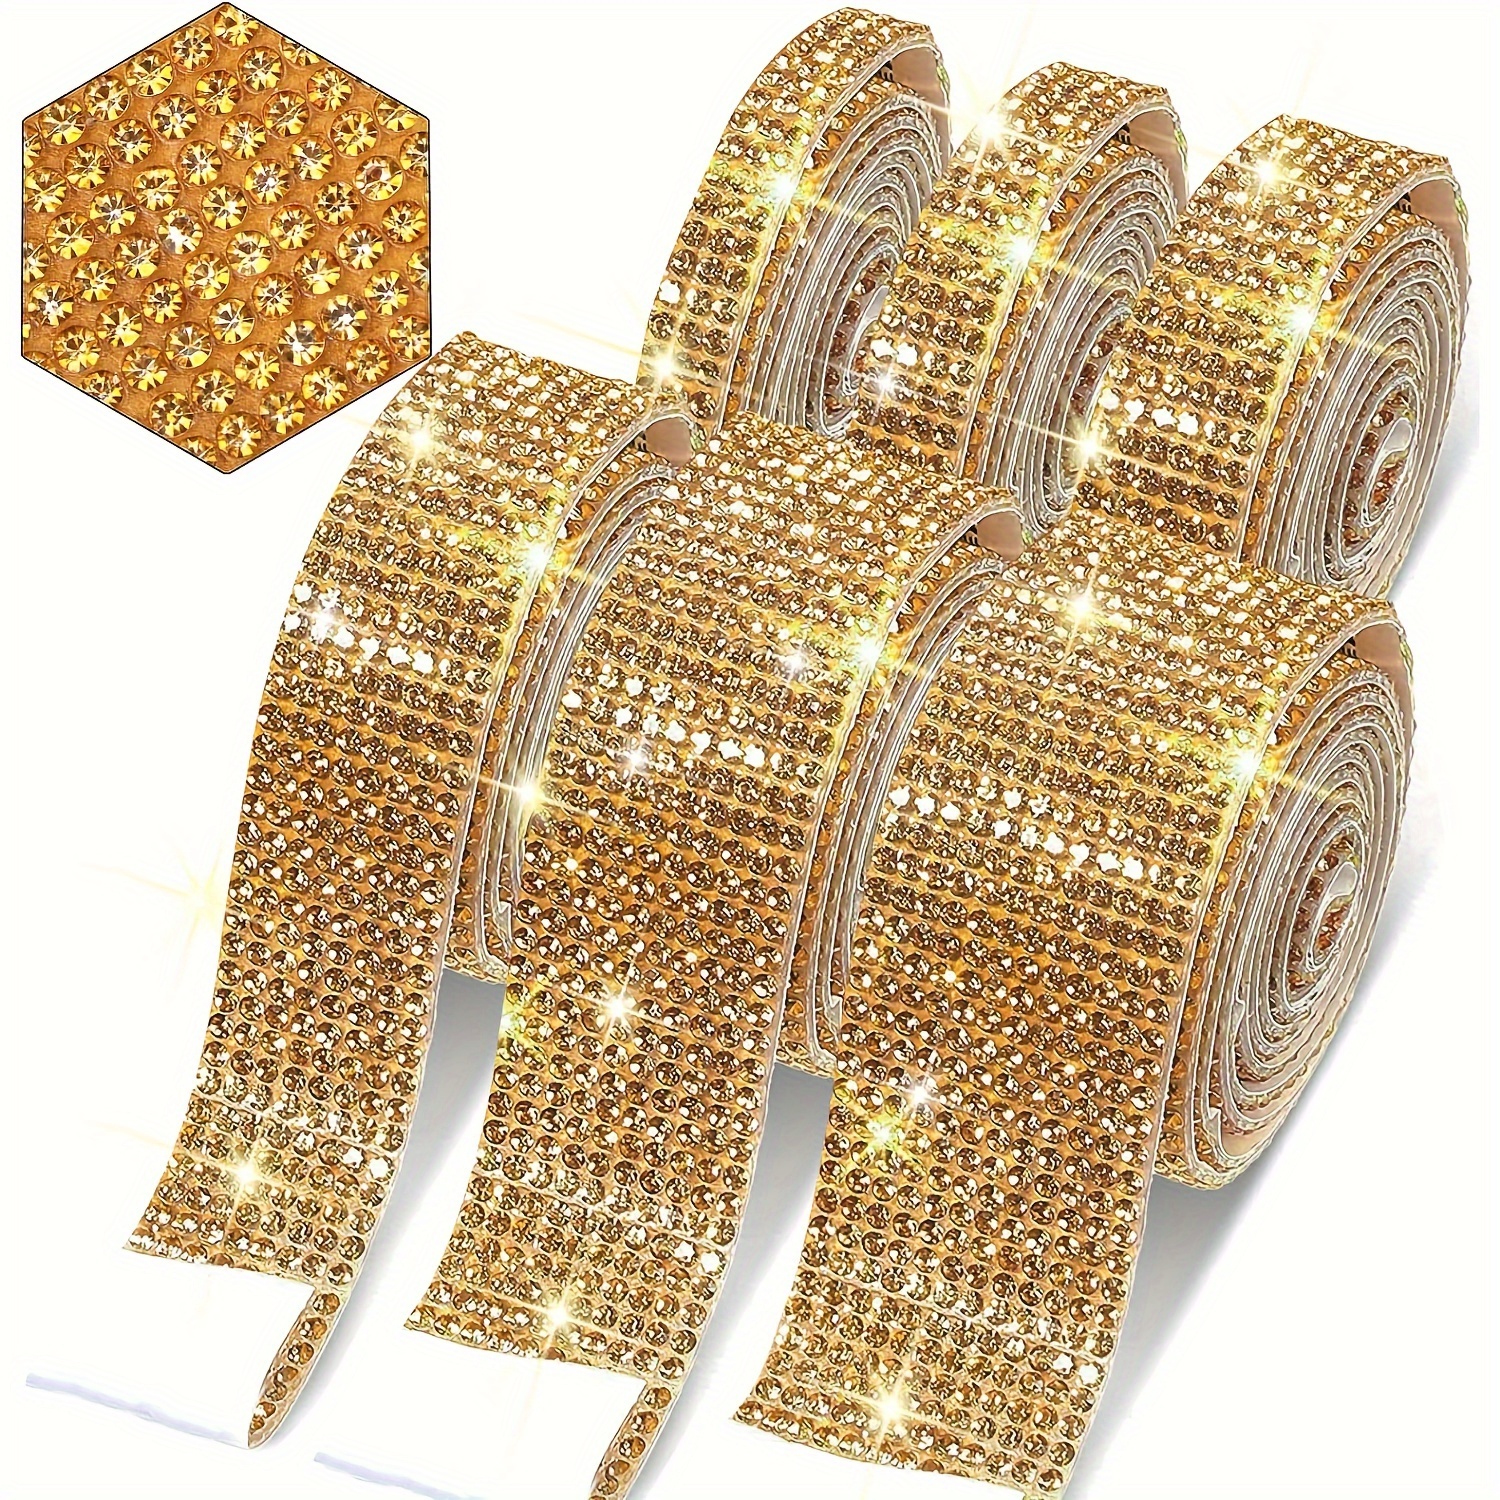 

Ybckeg Golden Self-adhesive Rhinestone Ribbon Rolls, Crystal Diamond Bling Sticker Tape For Diy Crafts, Wedding Party Decorations, Car Phone Embellishments - 6 Pack